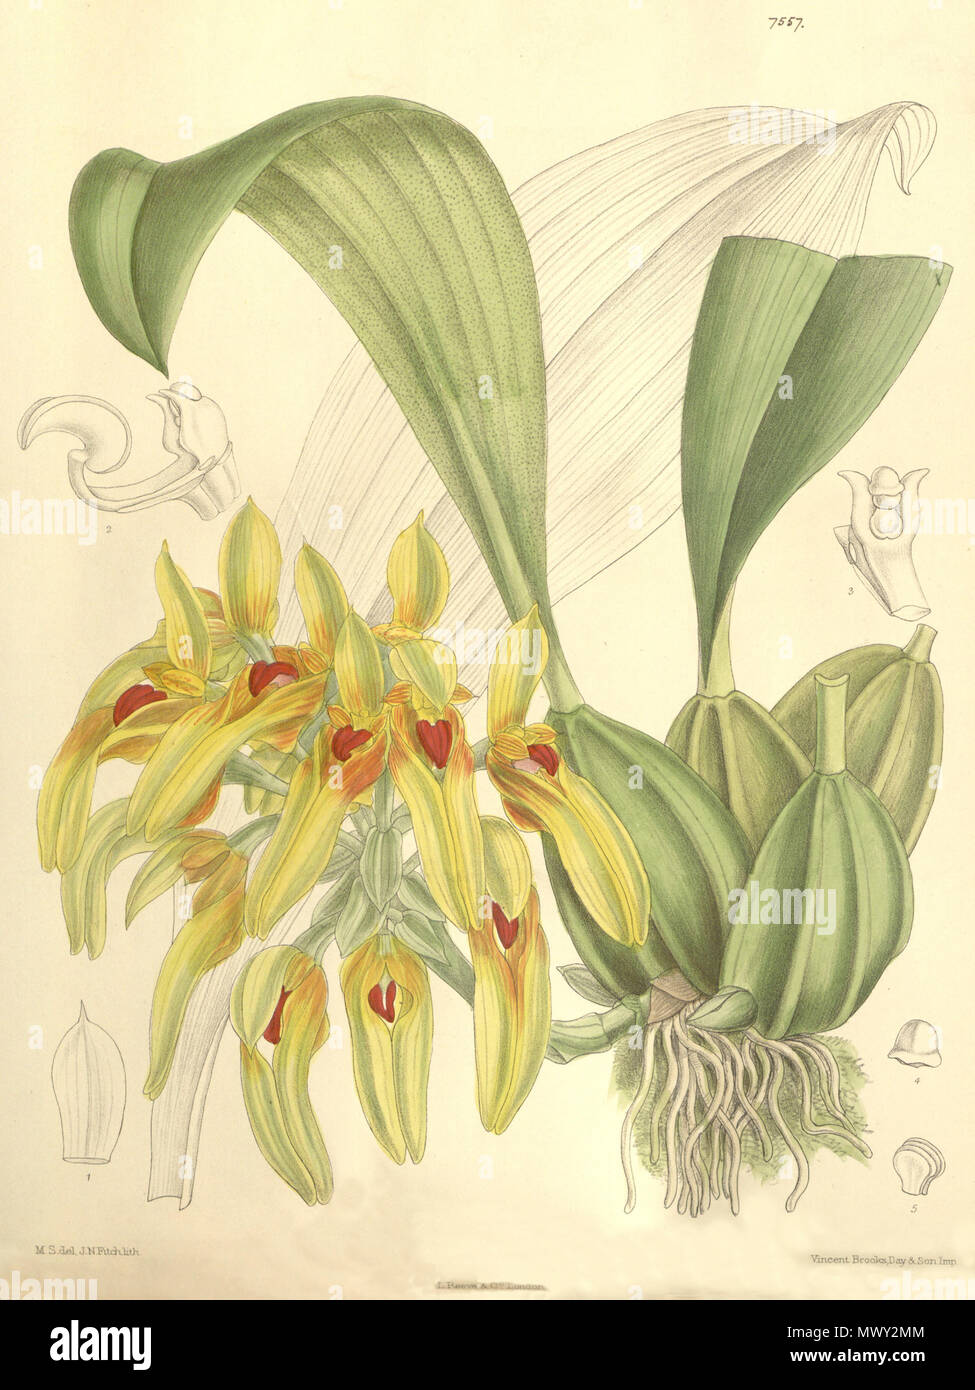 . Illustration of Bulbophyllum graveolens (as Cirrhopetalum robustum) . 1897. M. S. del. ( = Matilda Smith, 1854-1926), J. N. Fitch lith. ( = John Nugent Fitch, 1840–1927) Description by Joseph Dalton Hooker (1817—1911) 104 Bulbophyllum graveolens (as Cirrhopetalum robustum) - Curtis' 123 (Ser. 3 no. 53) pl. 7557 (1897) Stock Photo